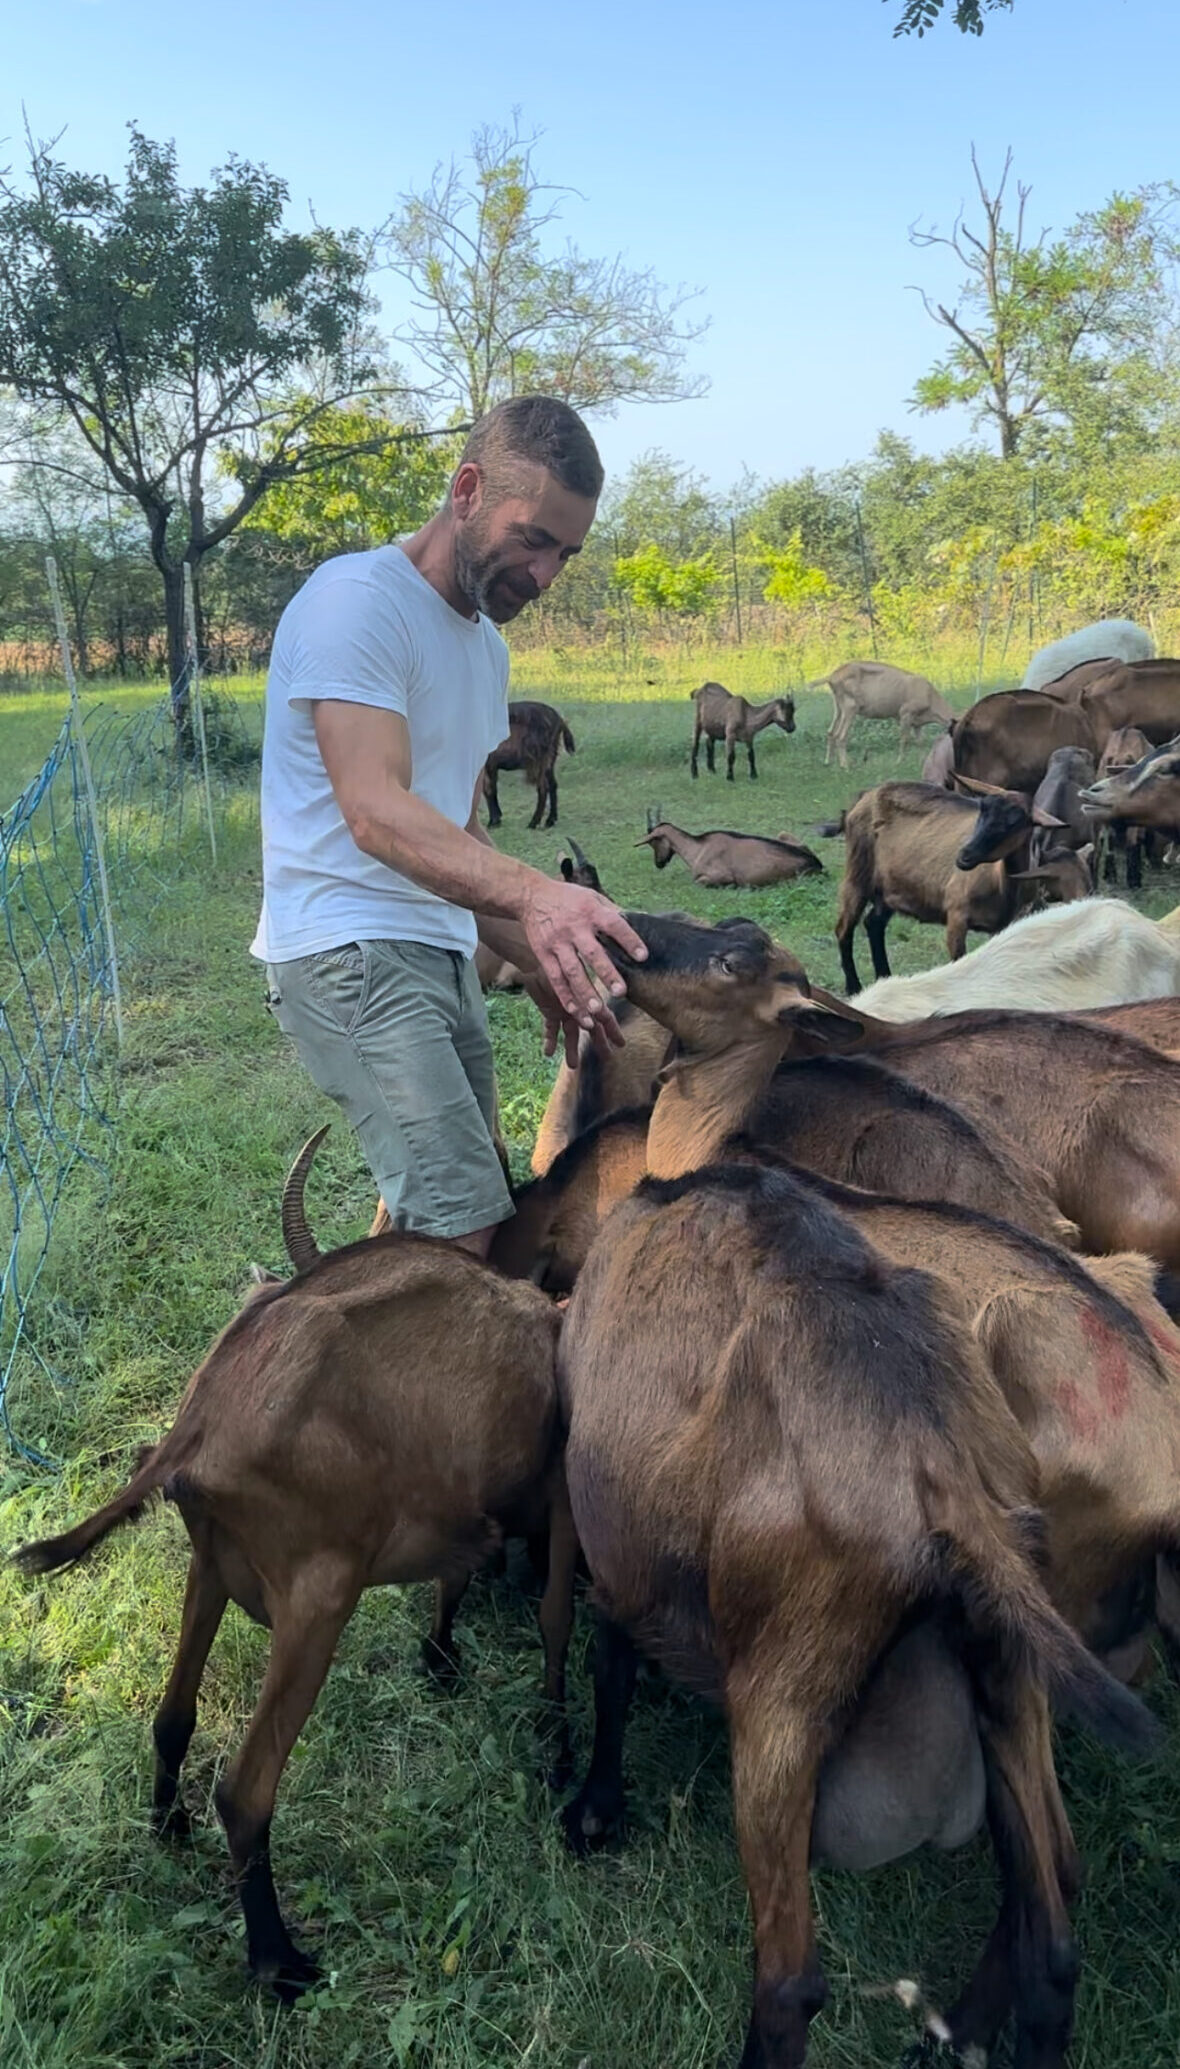 Goat guy in Italy via Dropbox.